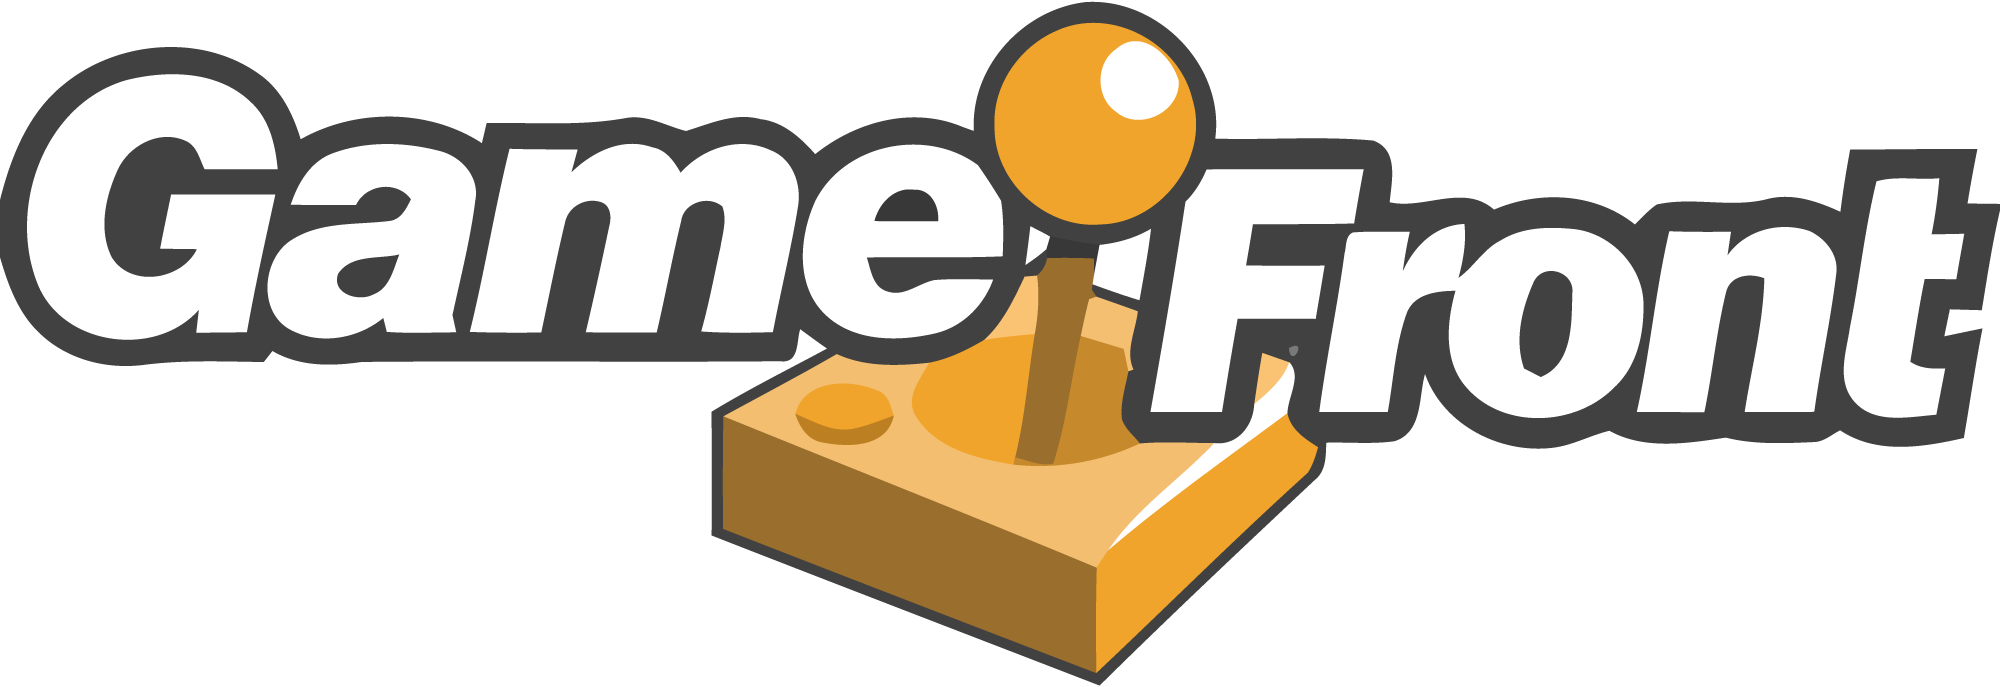 gamefront logo